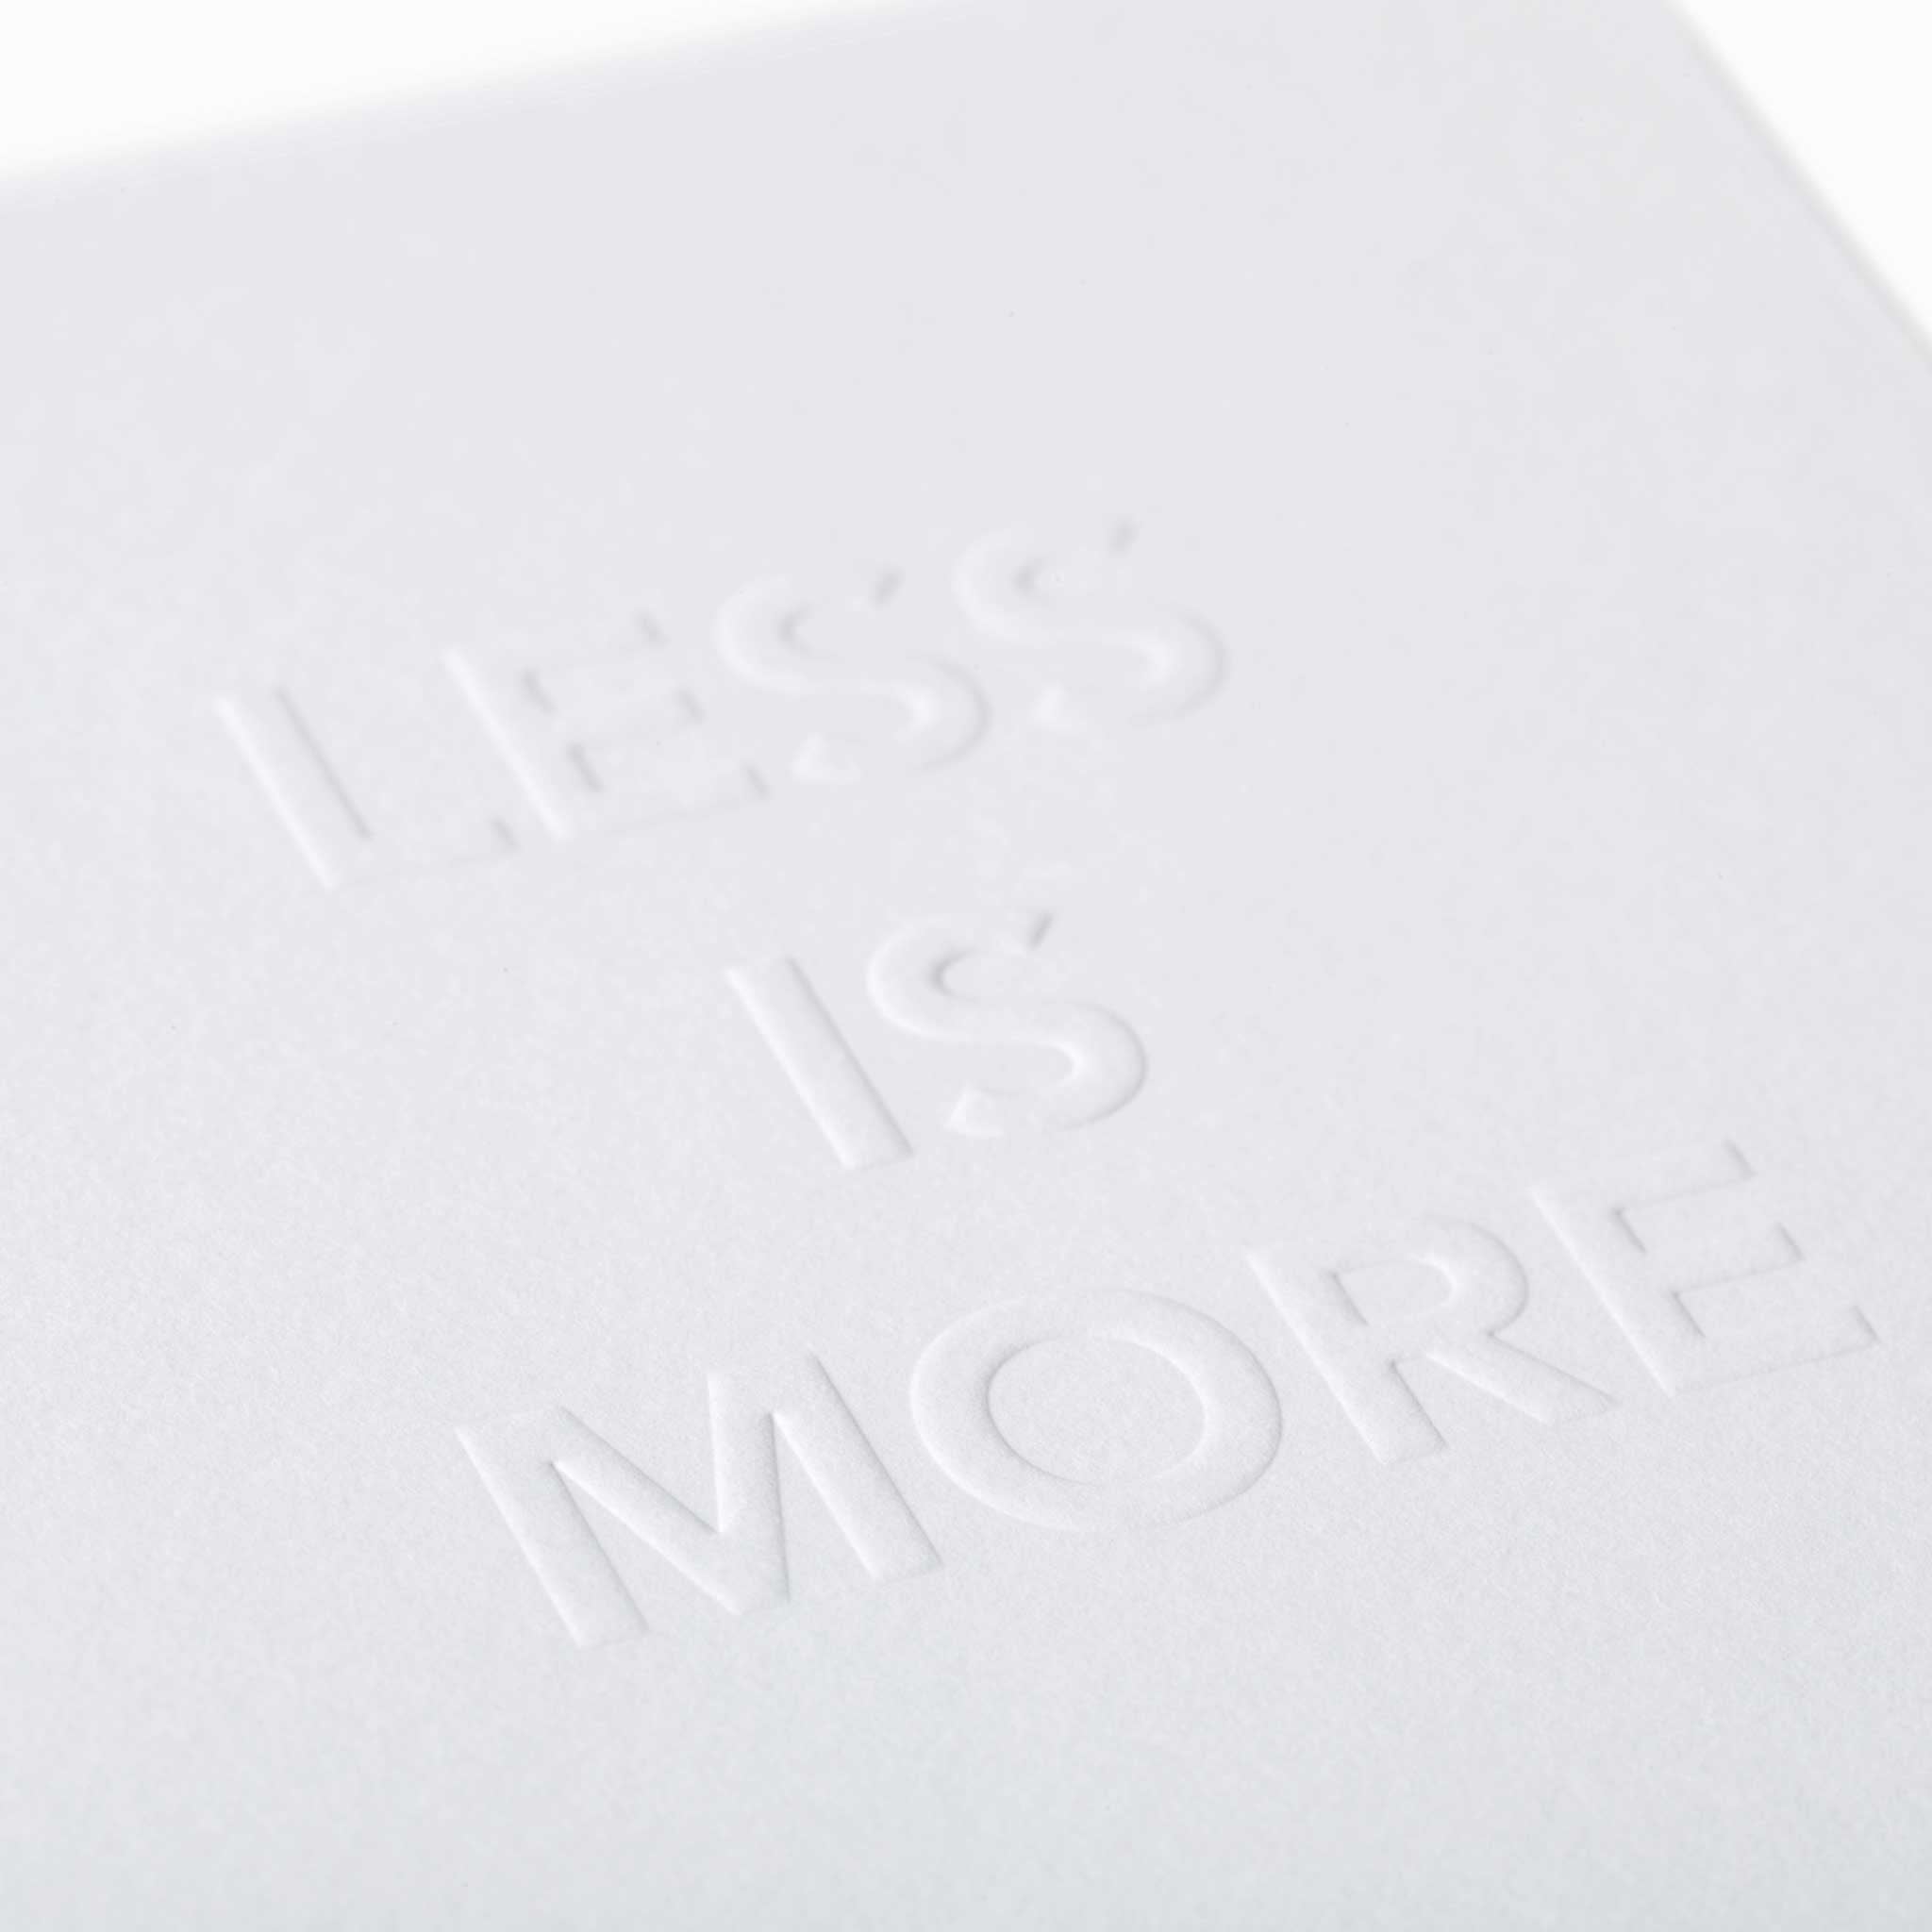 LESS IS MORE | POSTCARD | Architects quotes | 10x15 cm | Cinqpoints